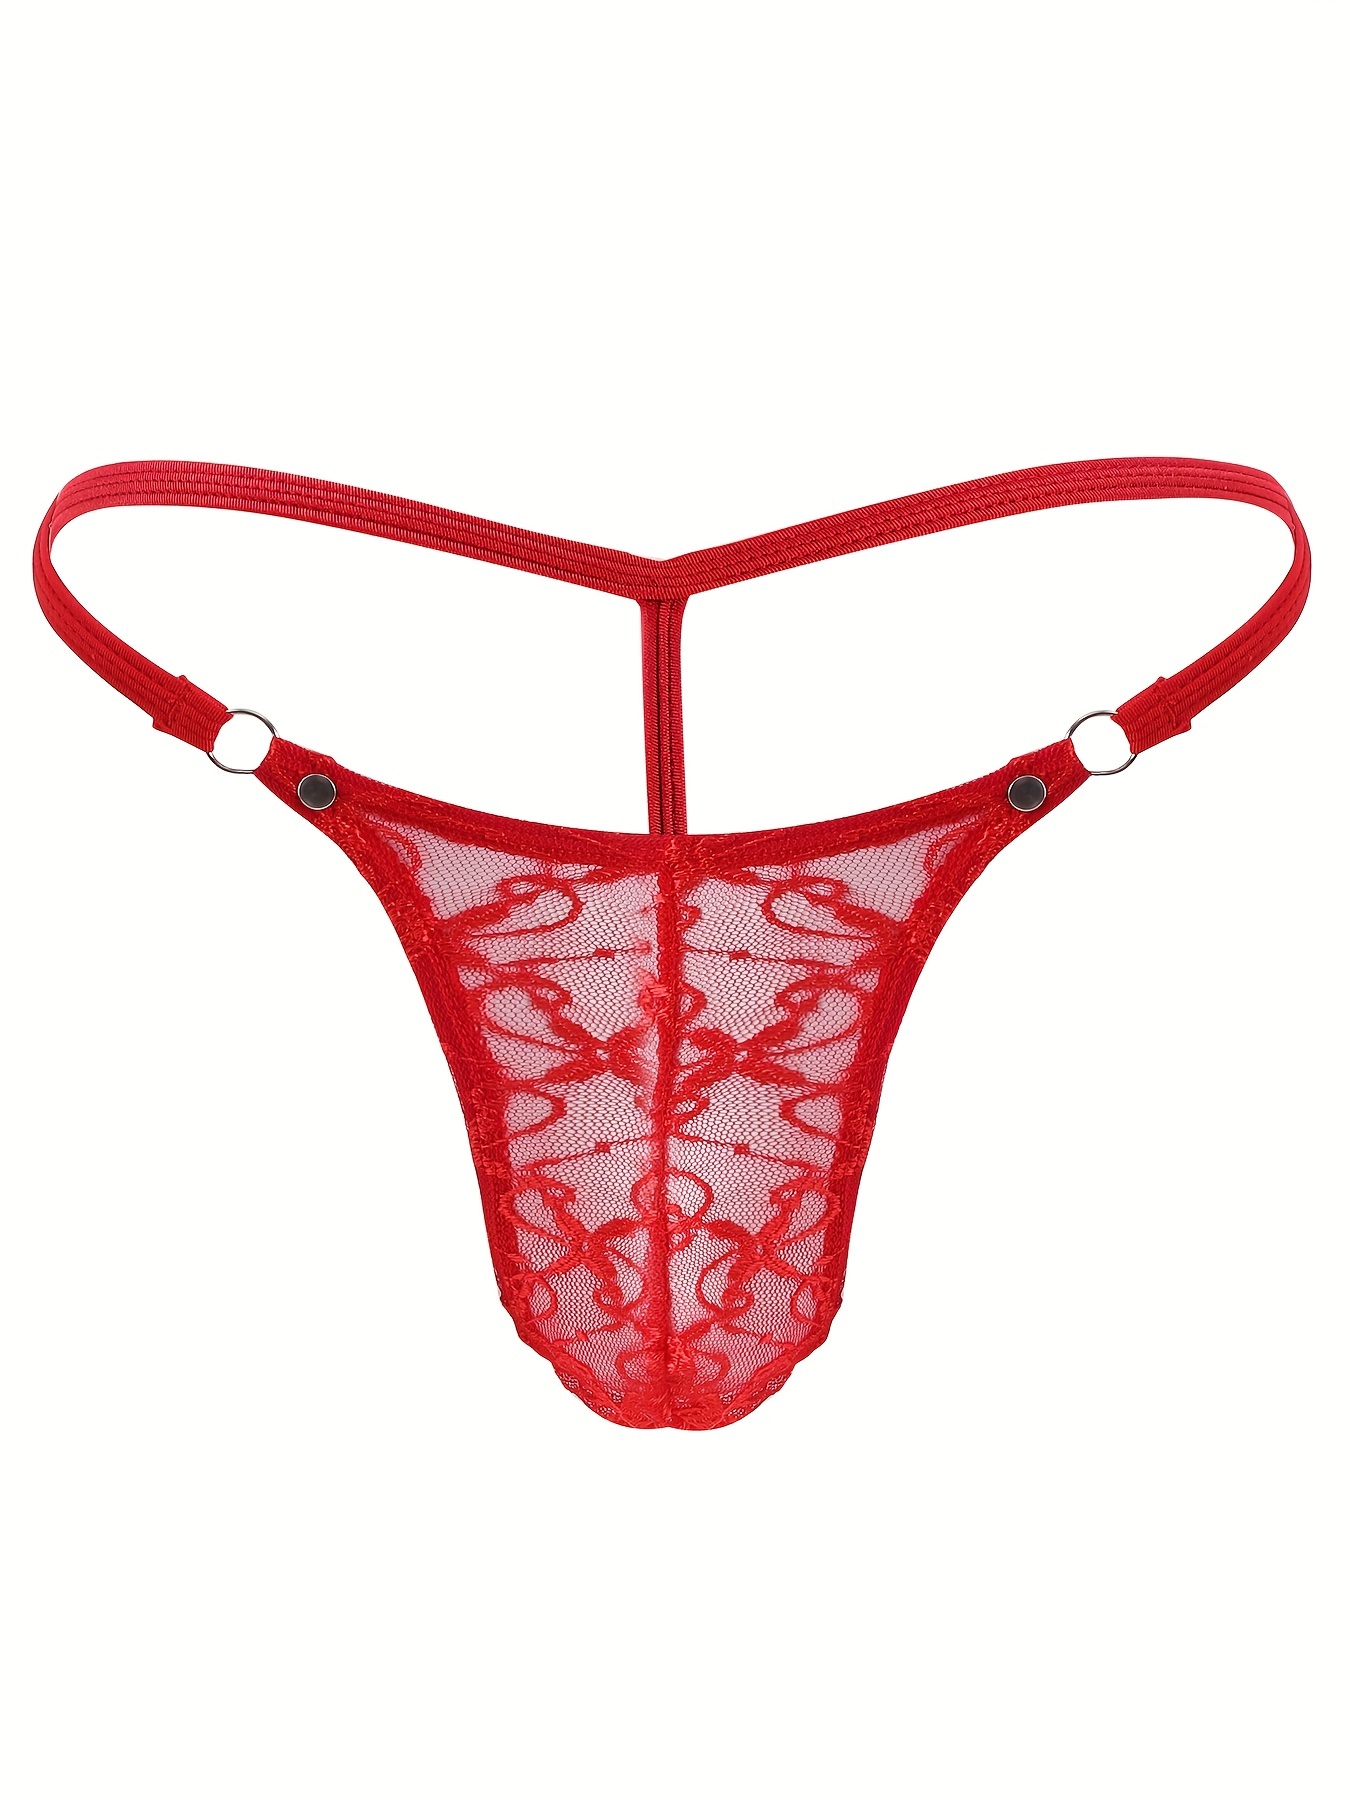 Men's Sexy Lace Sheer Underwear Thong, Jacquard Sexy Men's T-Back G-string  Underwear Bikini Briefs